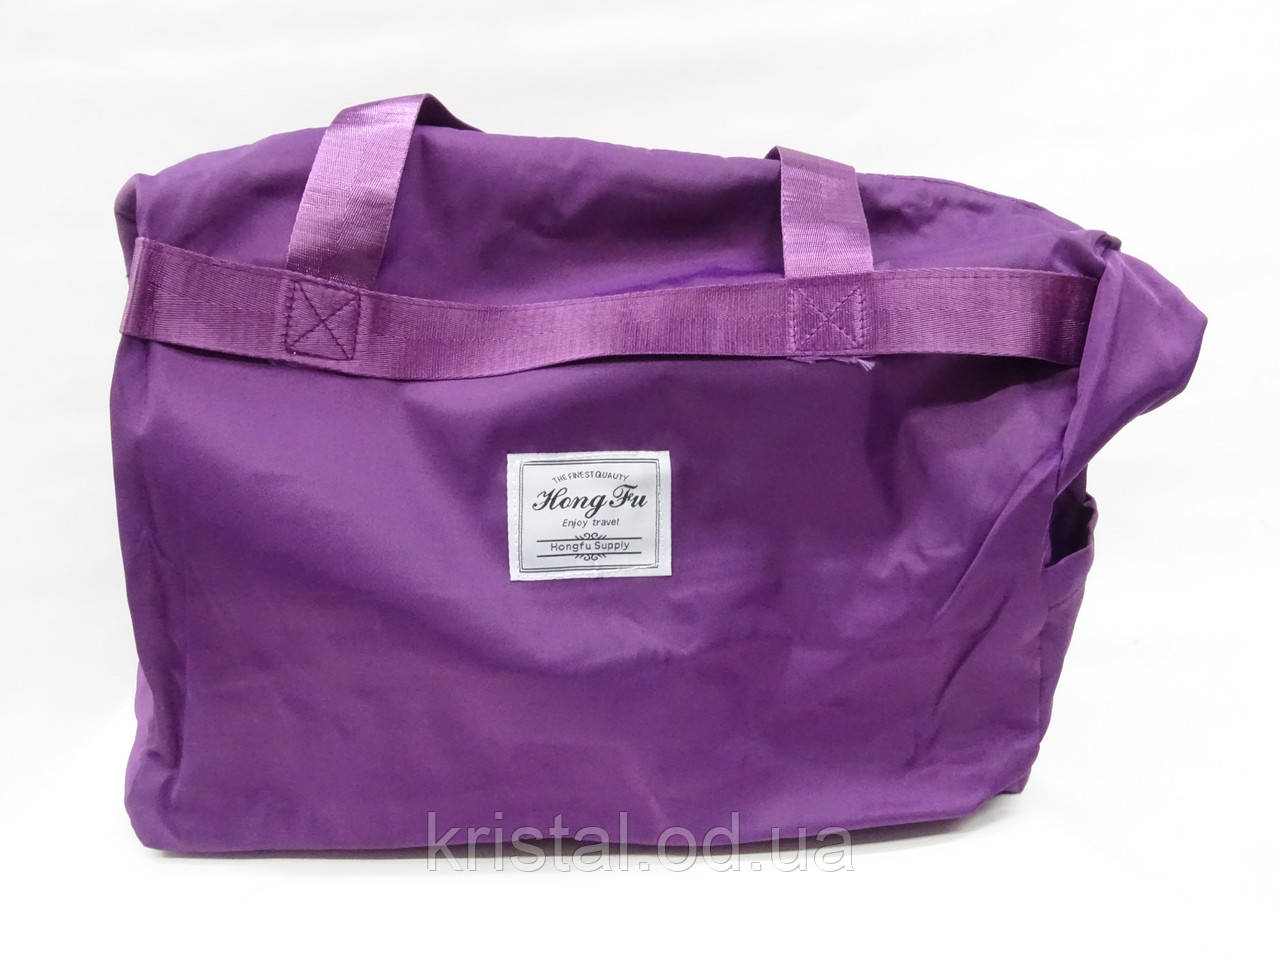 Жіноча сумка-шопер гуртом 42*26 см. серії "Новонька" No15663